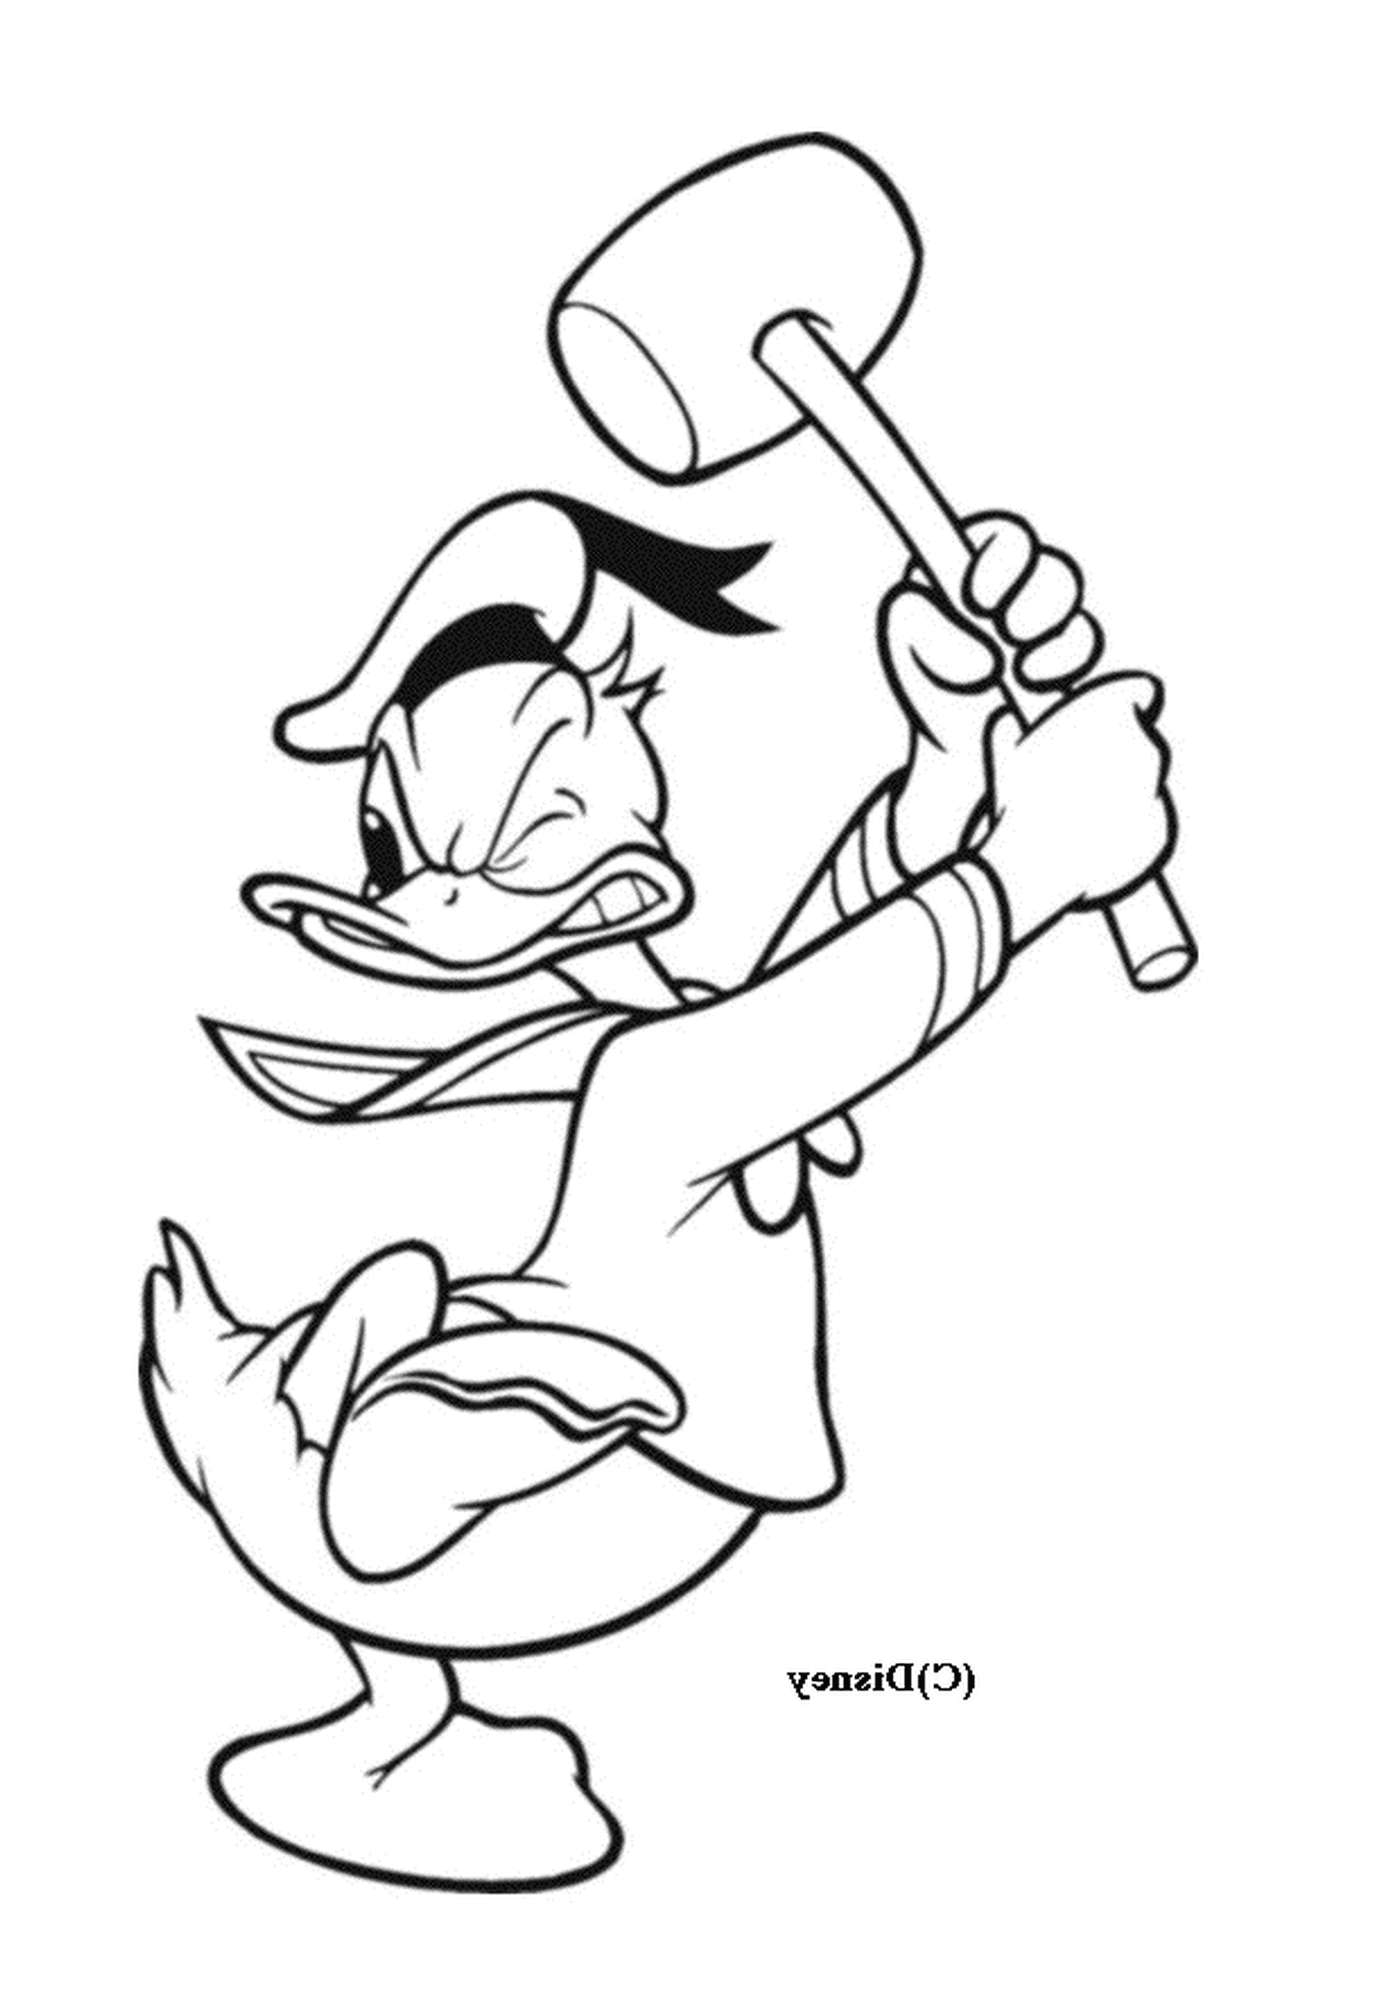  Donald plays baseball with vigour 